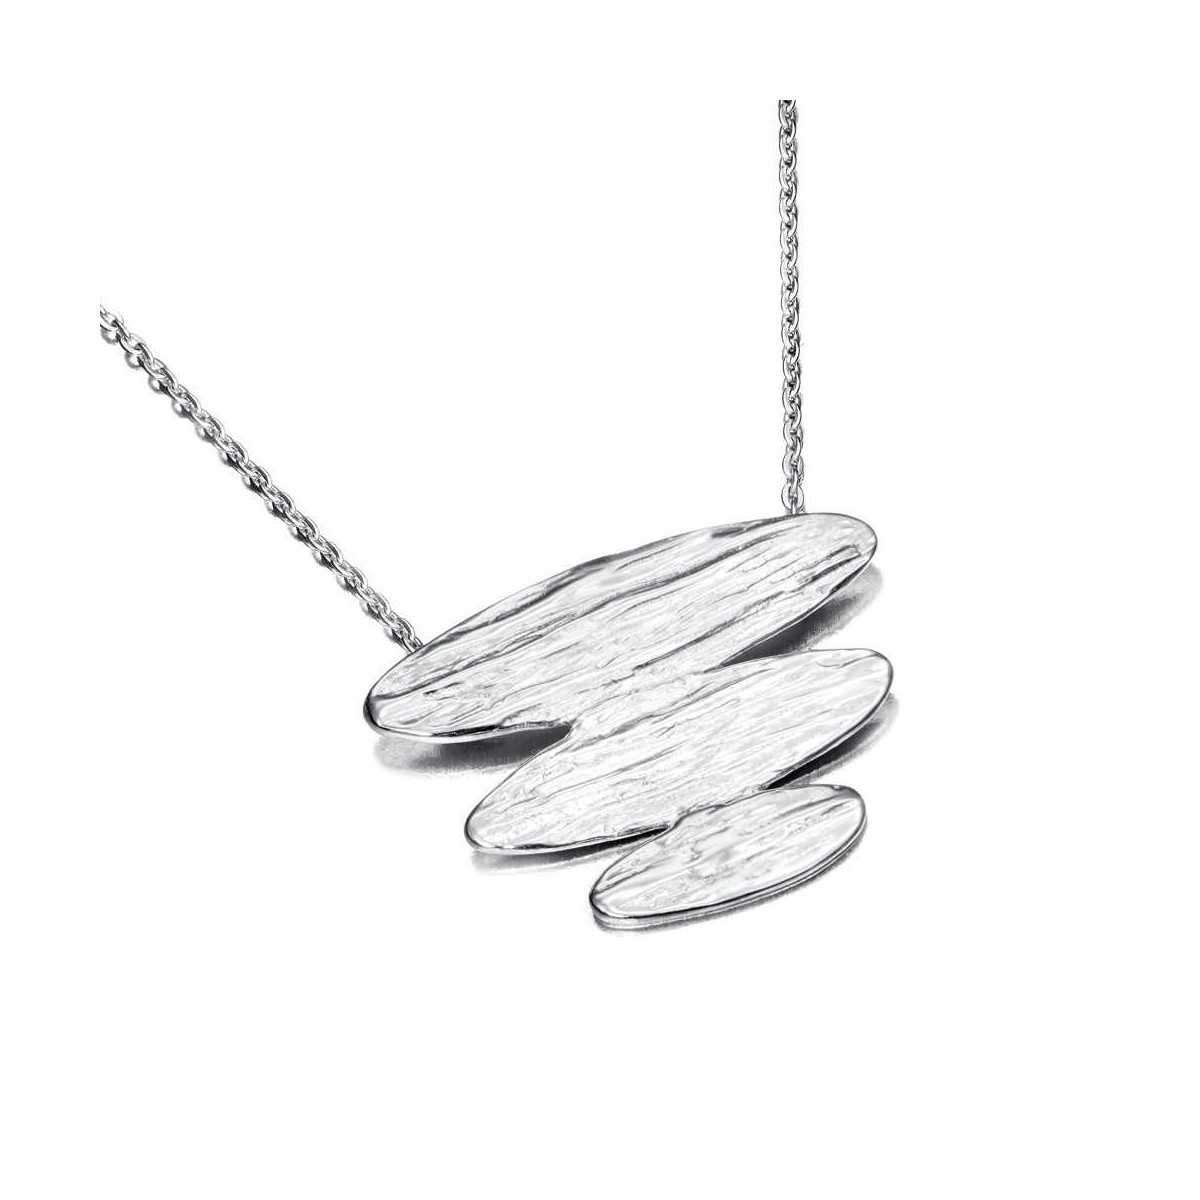 ARIZONA Necklace in Silver.